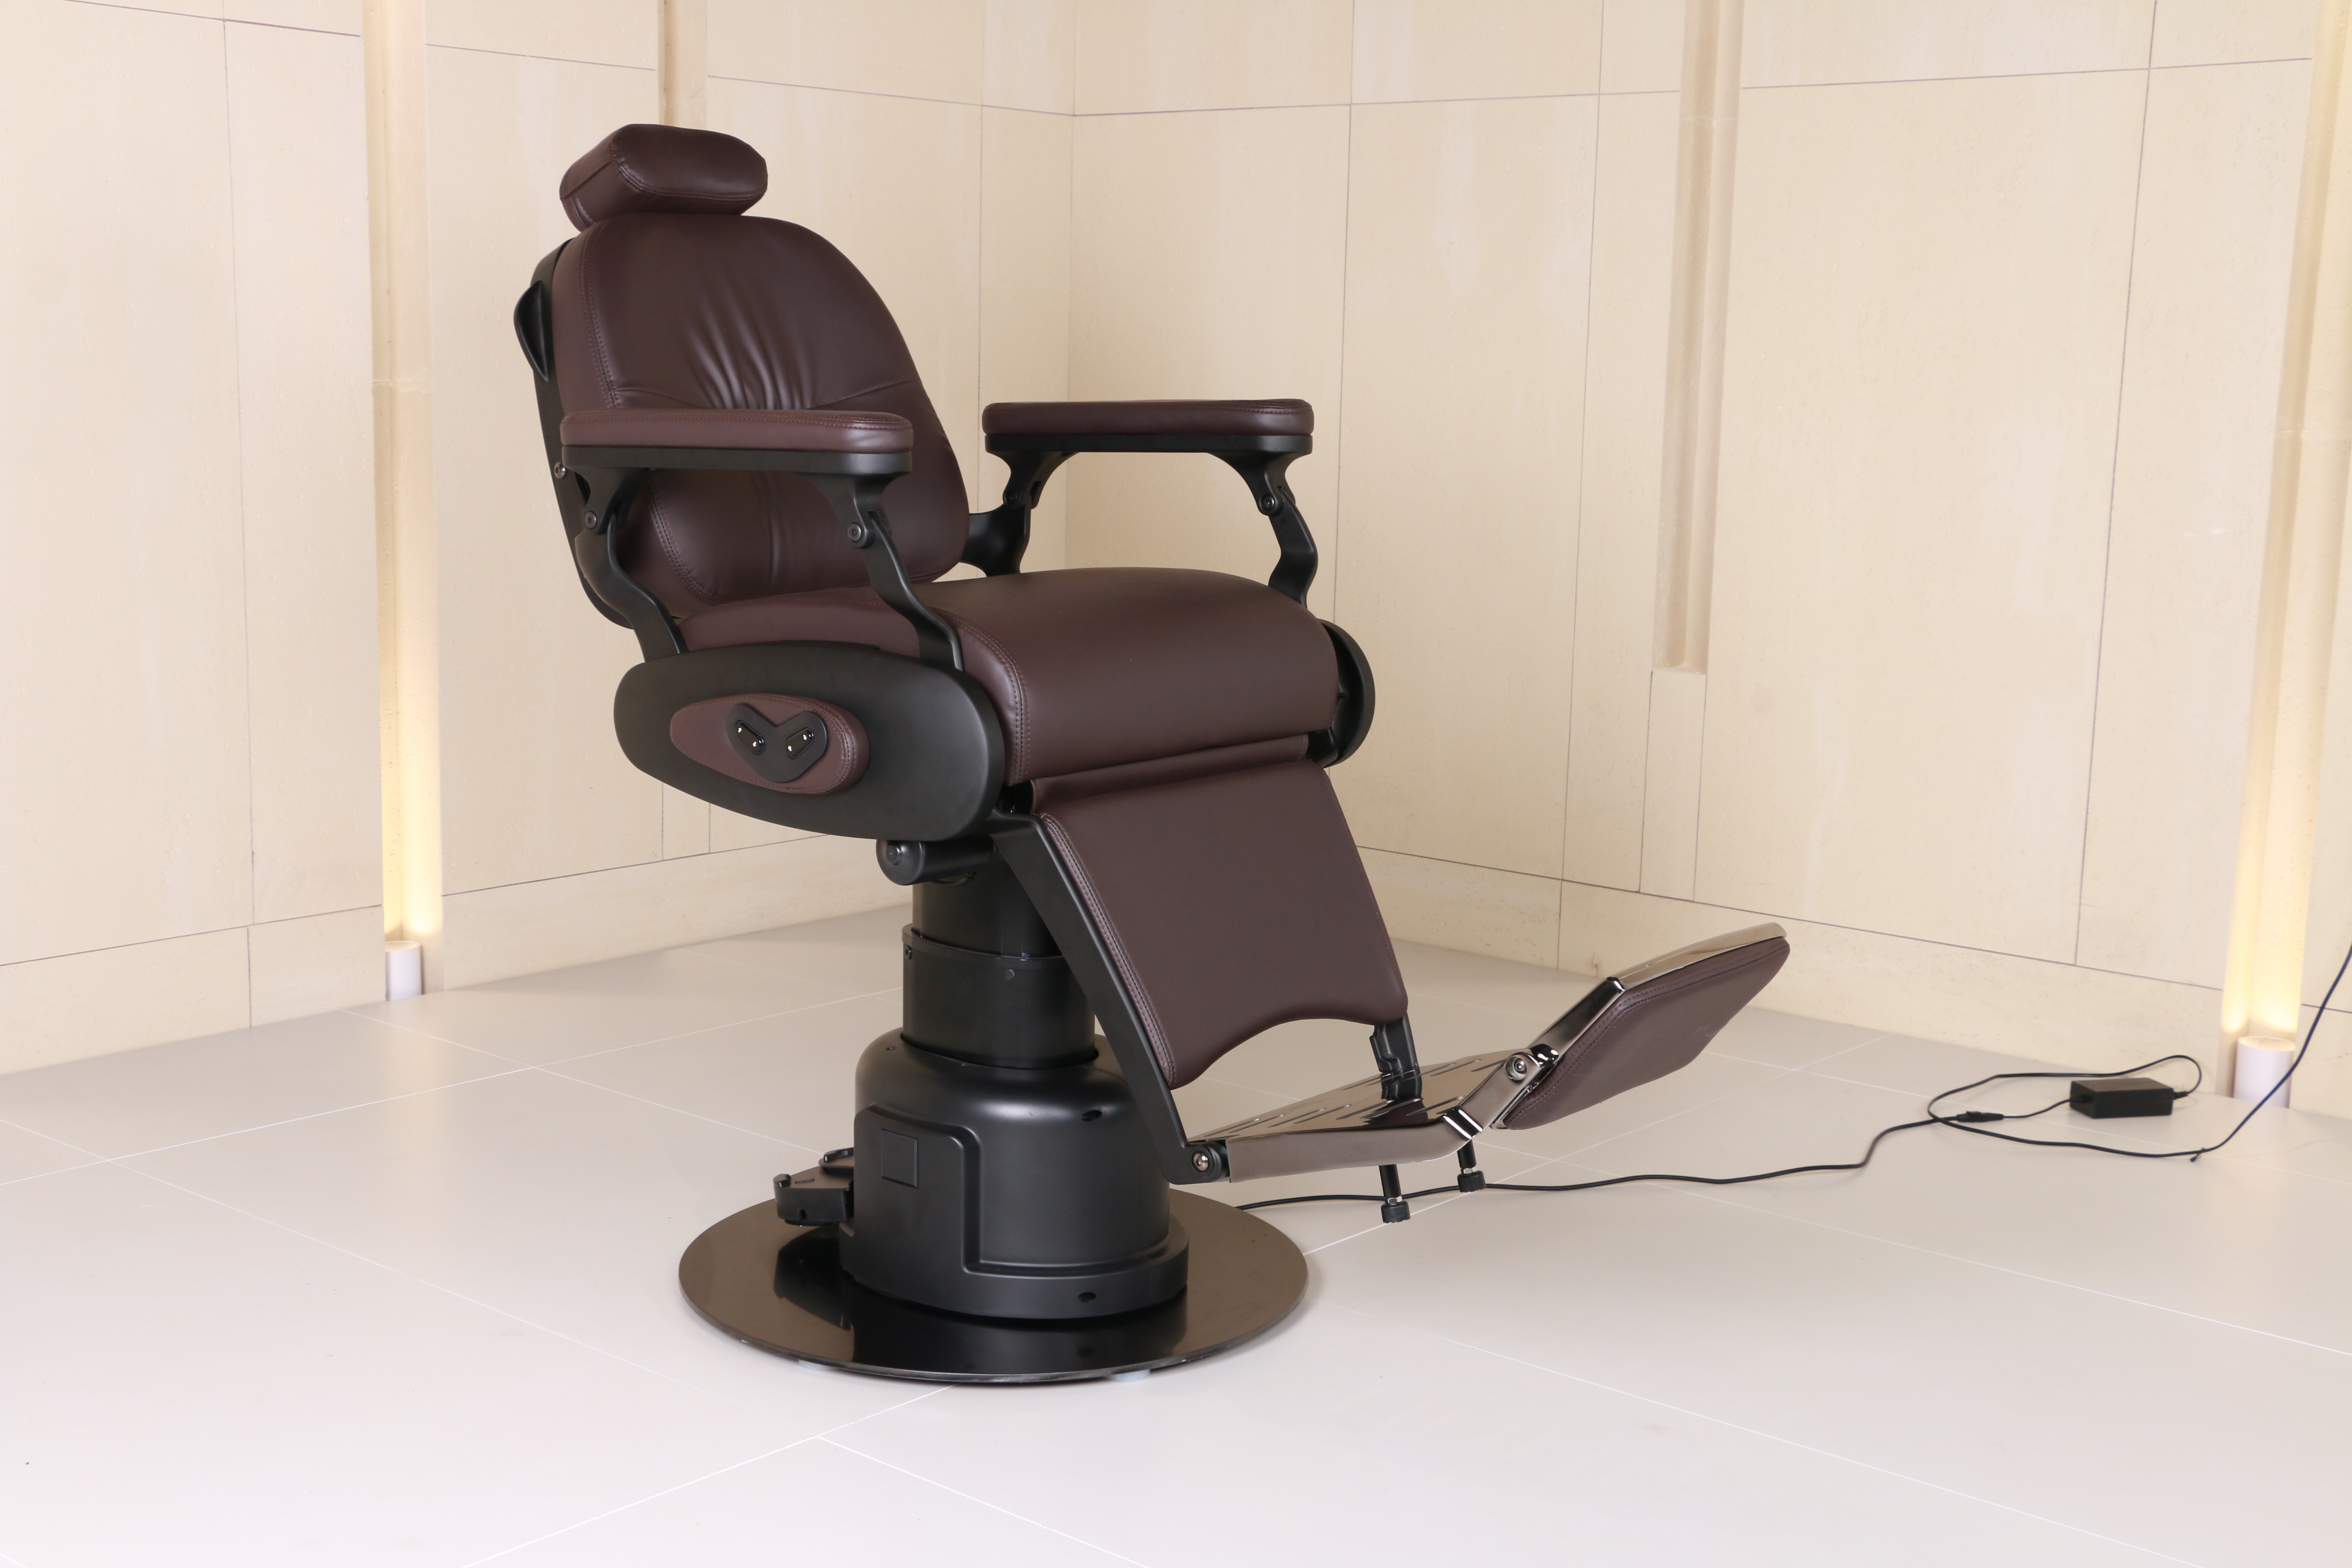 Electric reclining hydraulic pump barber chair modern hairdresser Lift chair styling chair